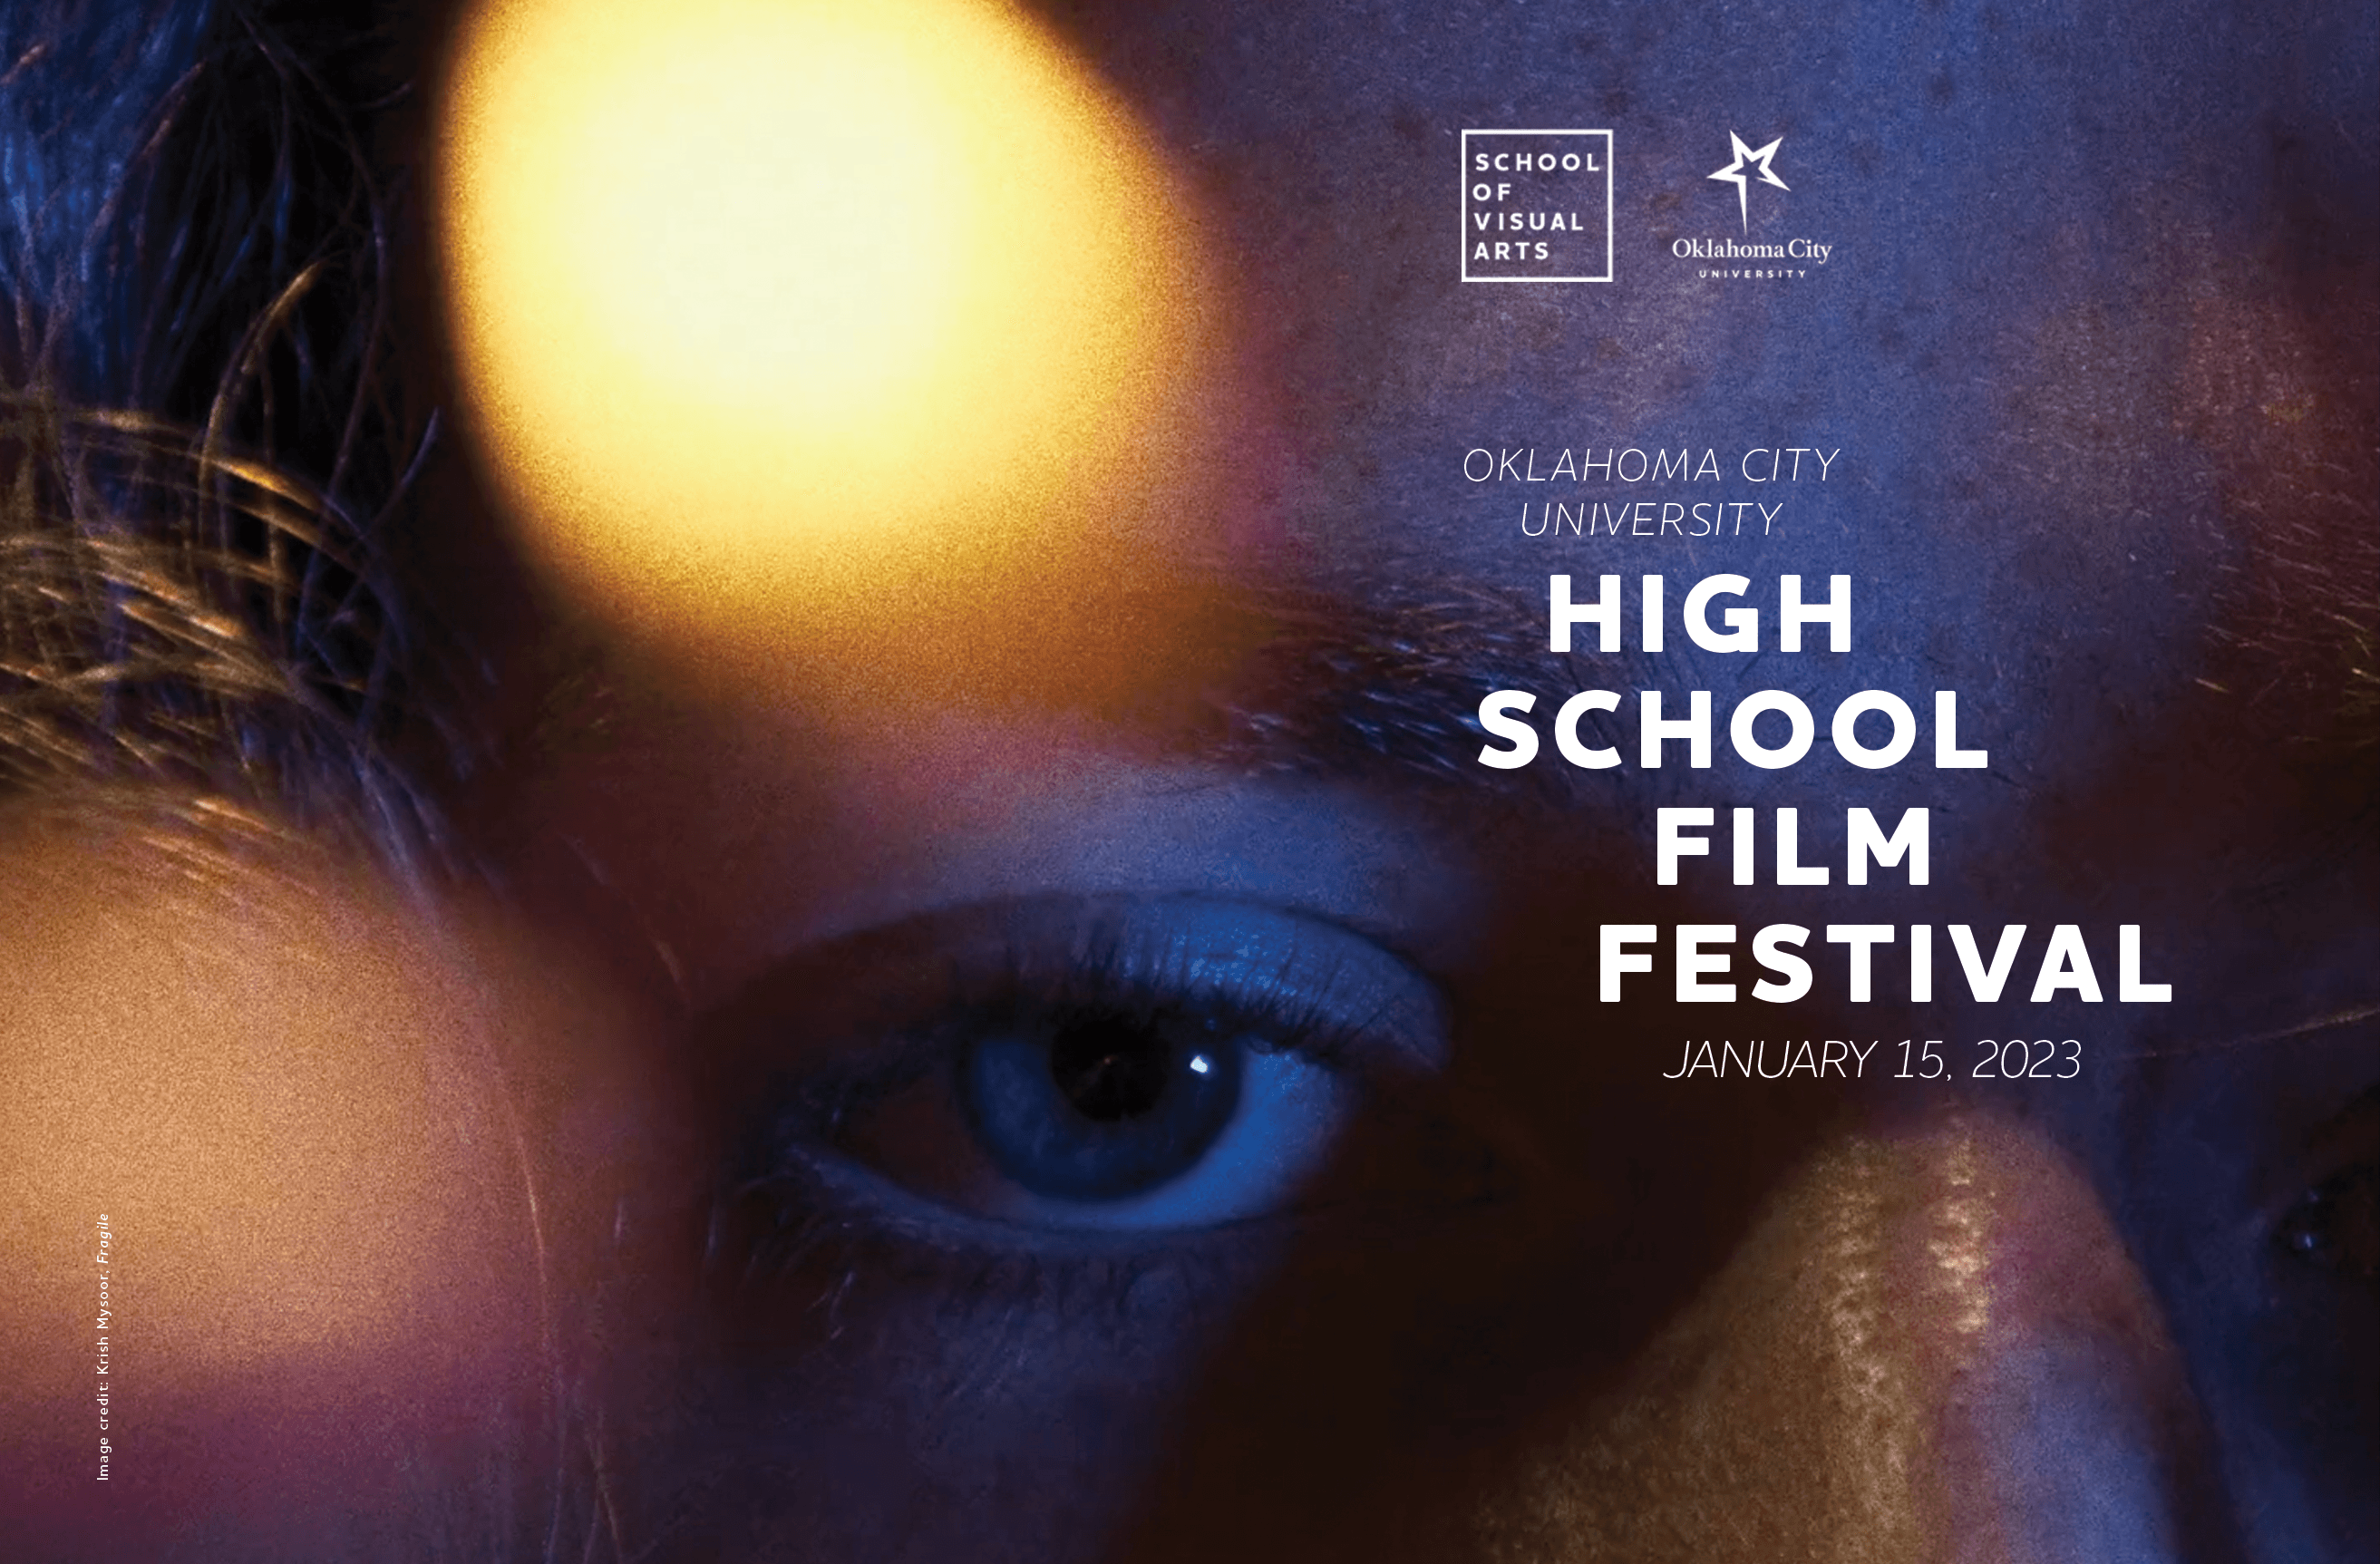 2023 High School Film Festival postcard with image of a human eye.